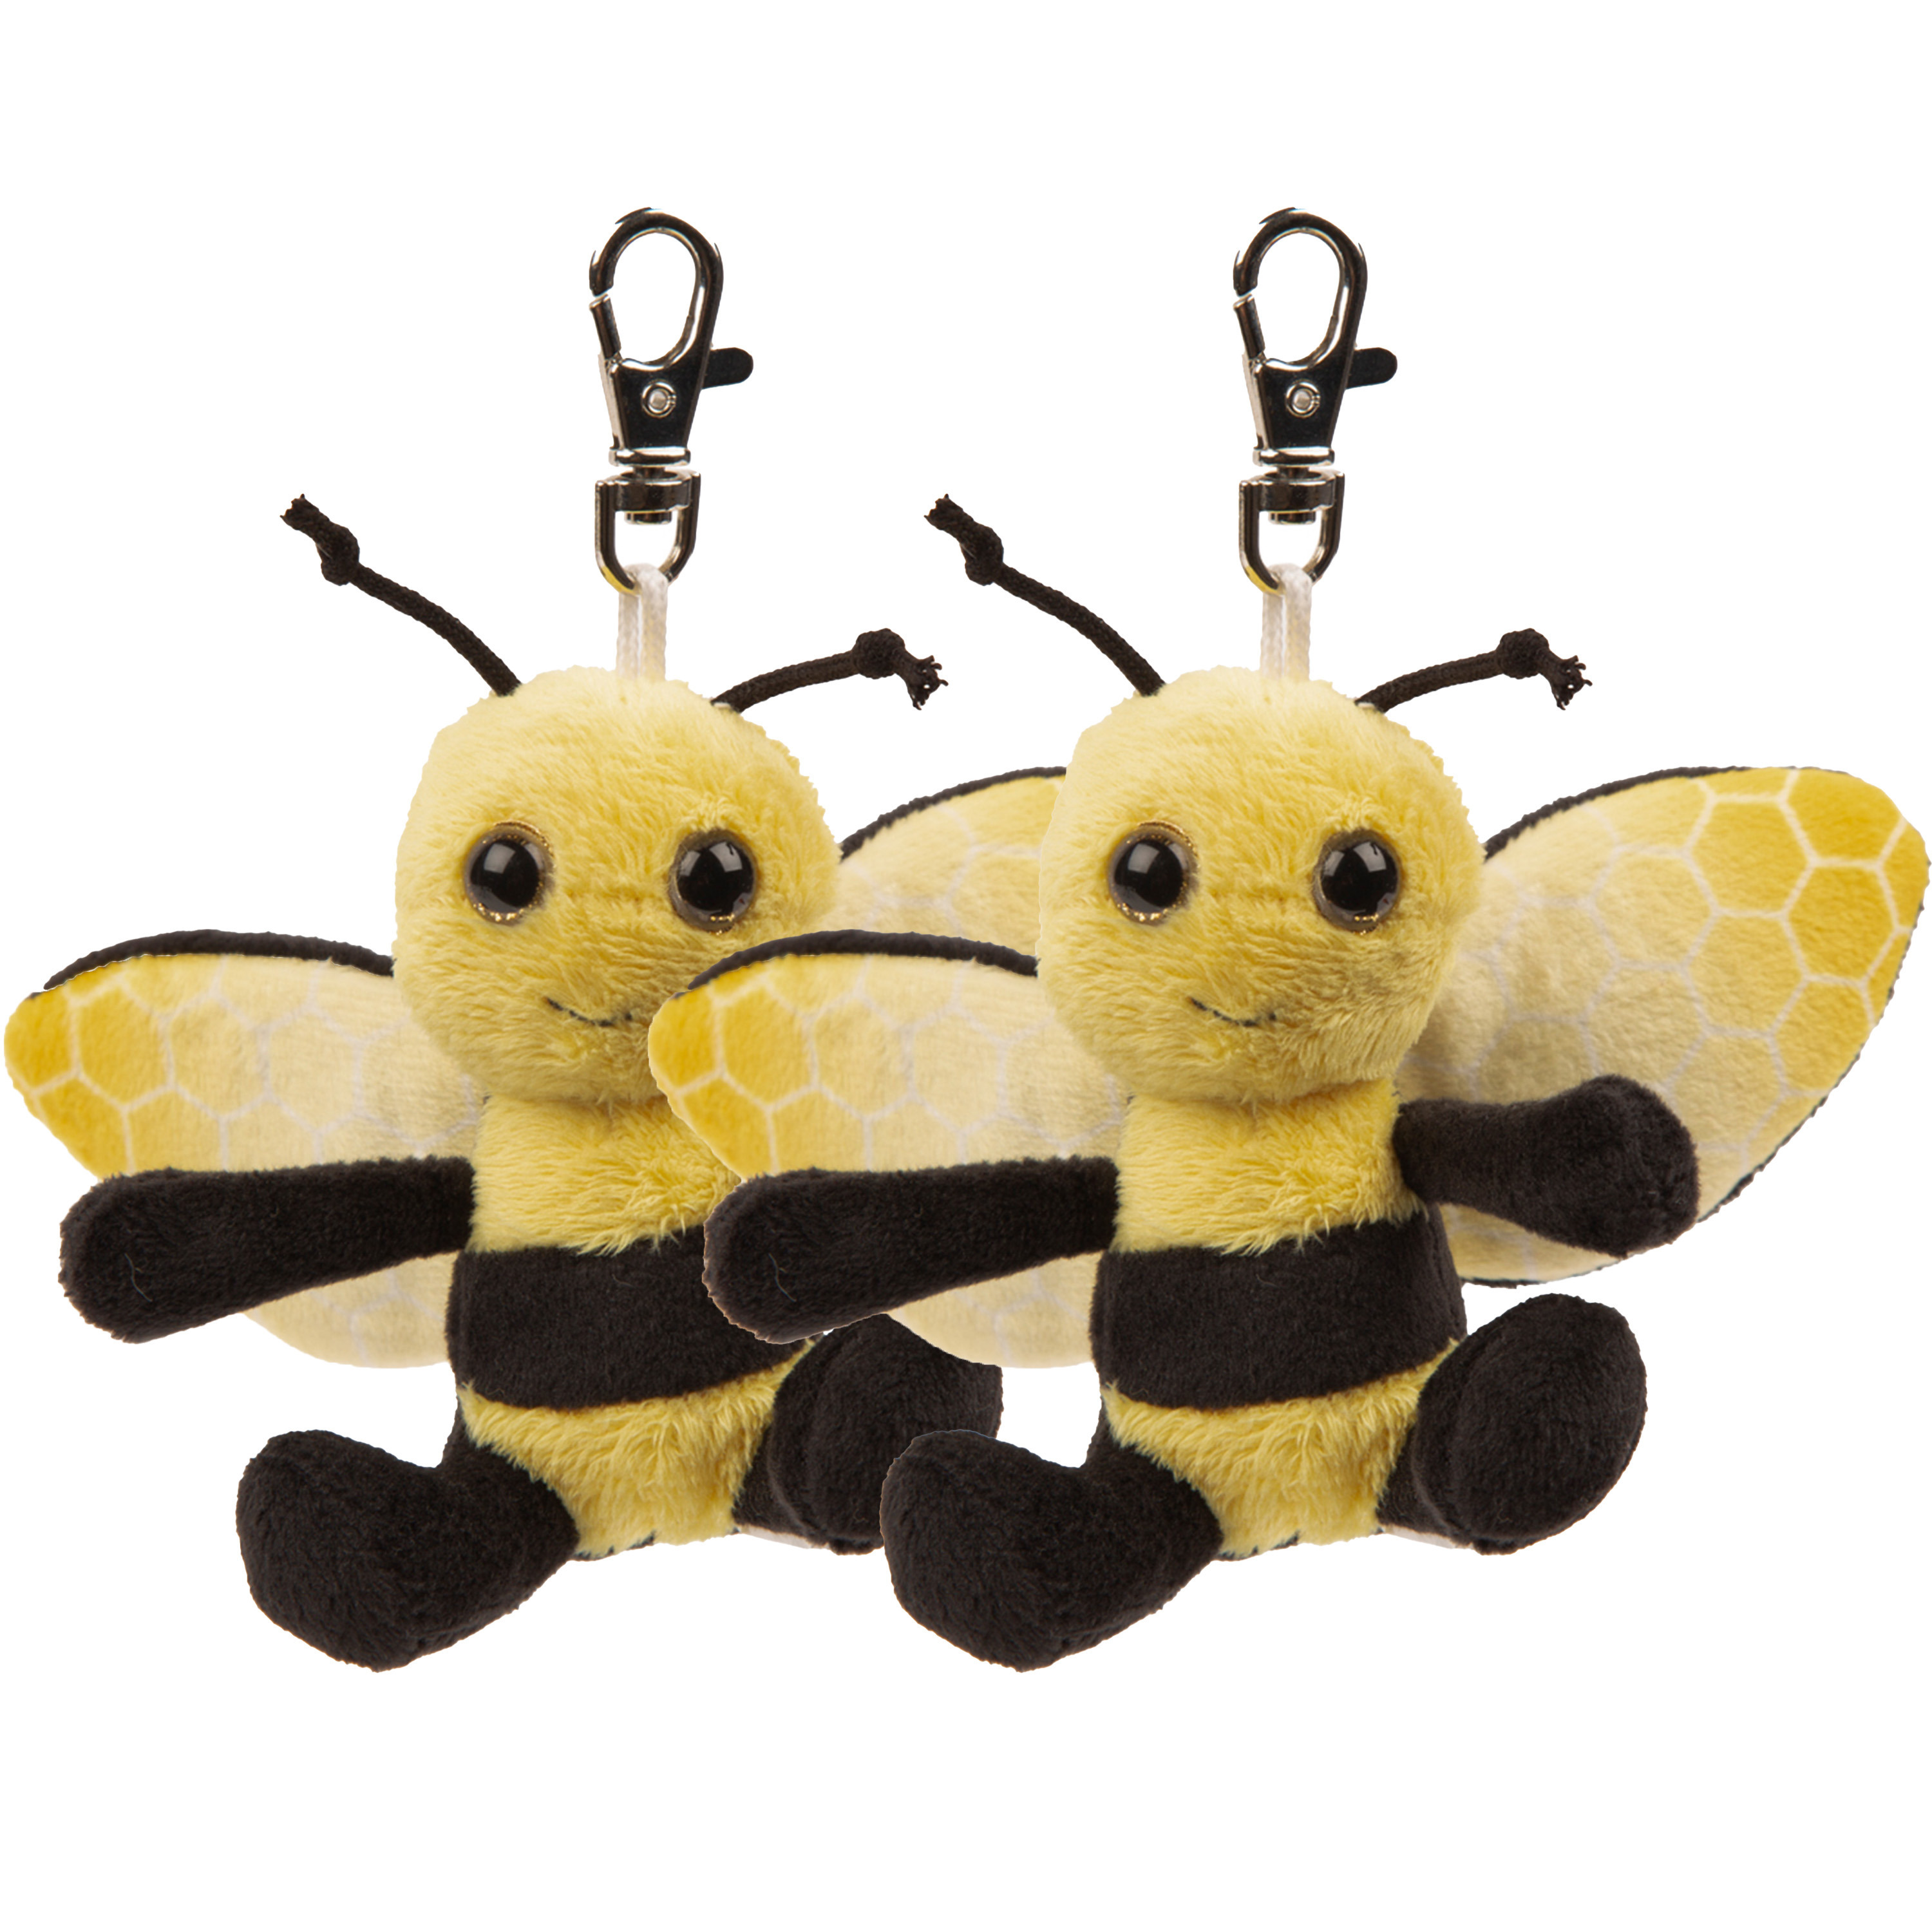 Pluche knuffeldier Bijen sleutelhanger - 2x - geel/zwart - 9 cm - clip sluiting -